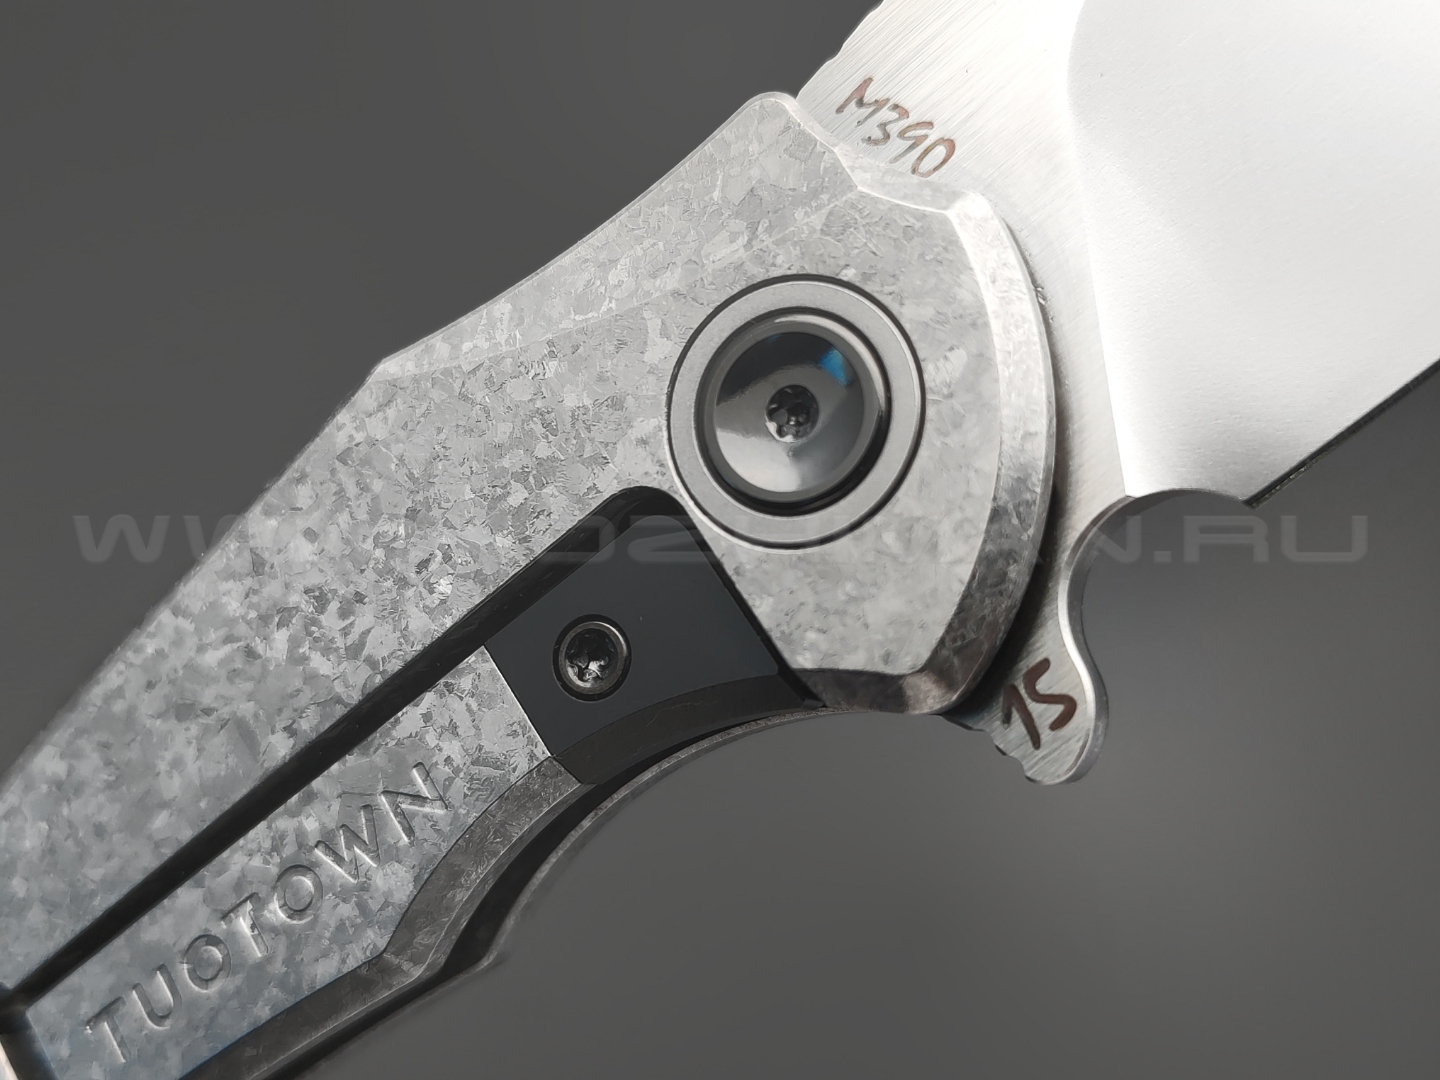 TuoTown нож Alatus-2 Integral сталь M390 bead-blast & satin, рукоять Titanium Crystal Grey